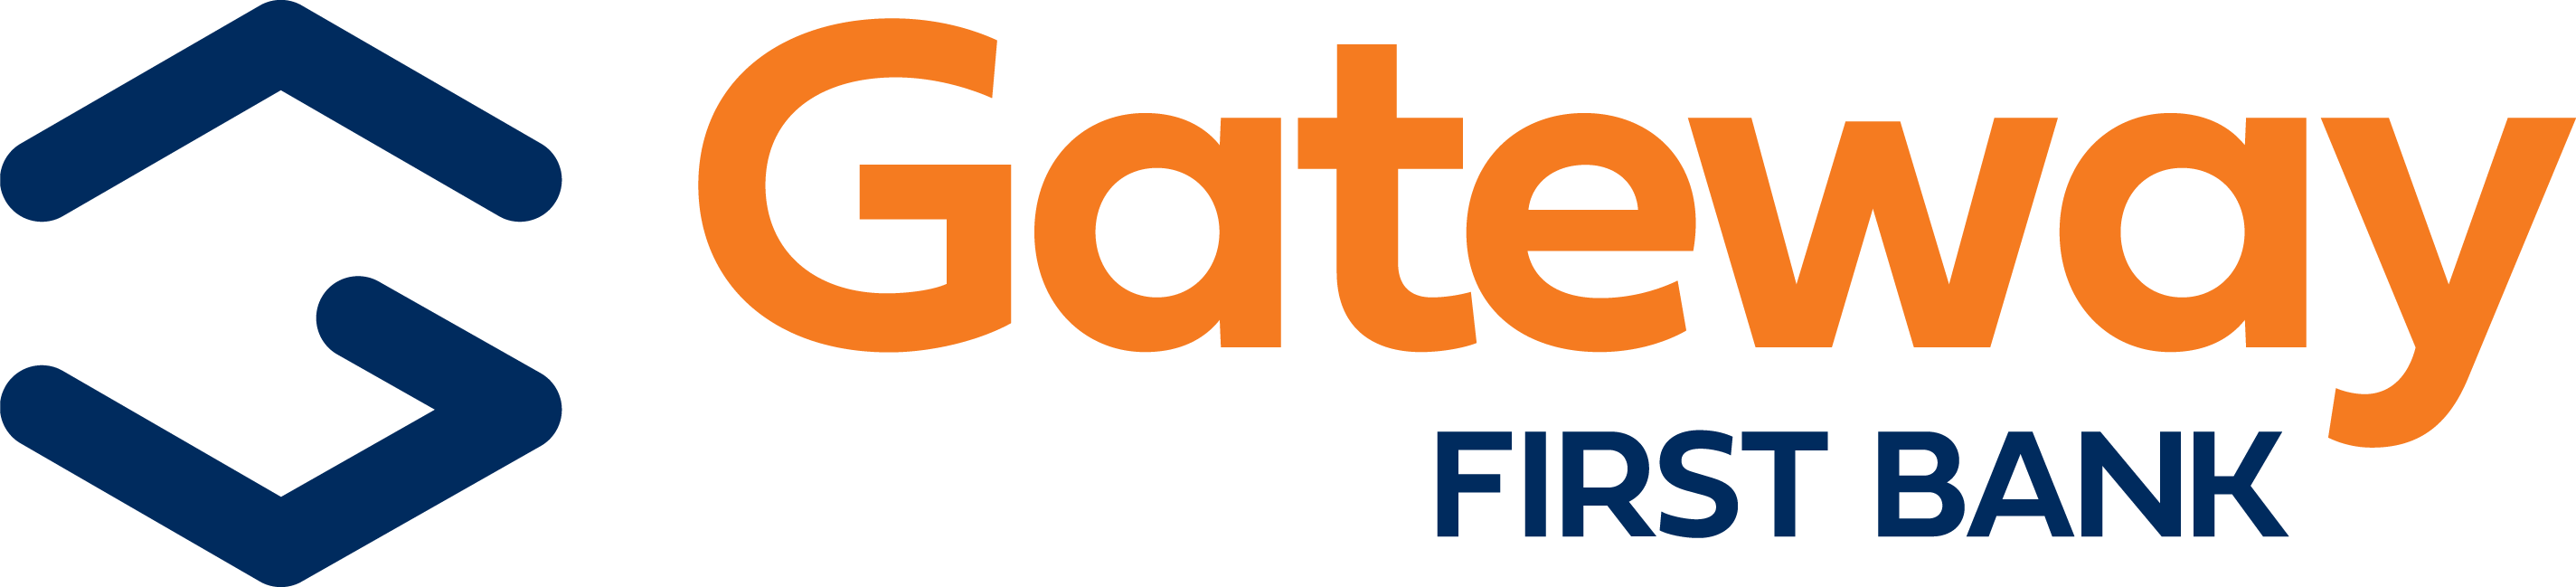 Gateway First Bank Company Logo